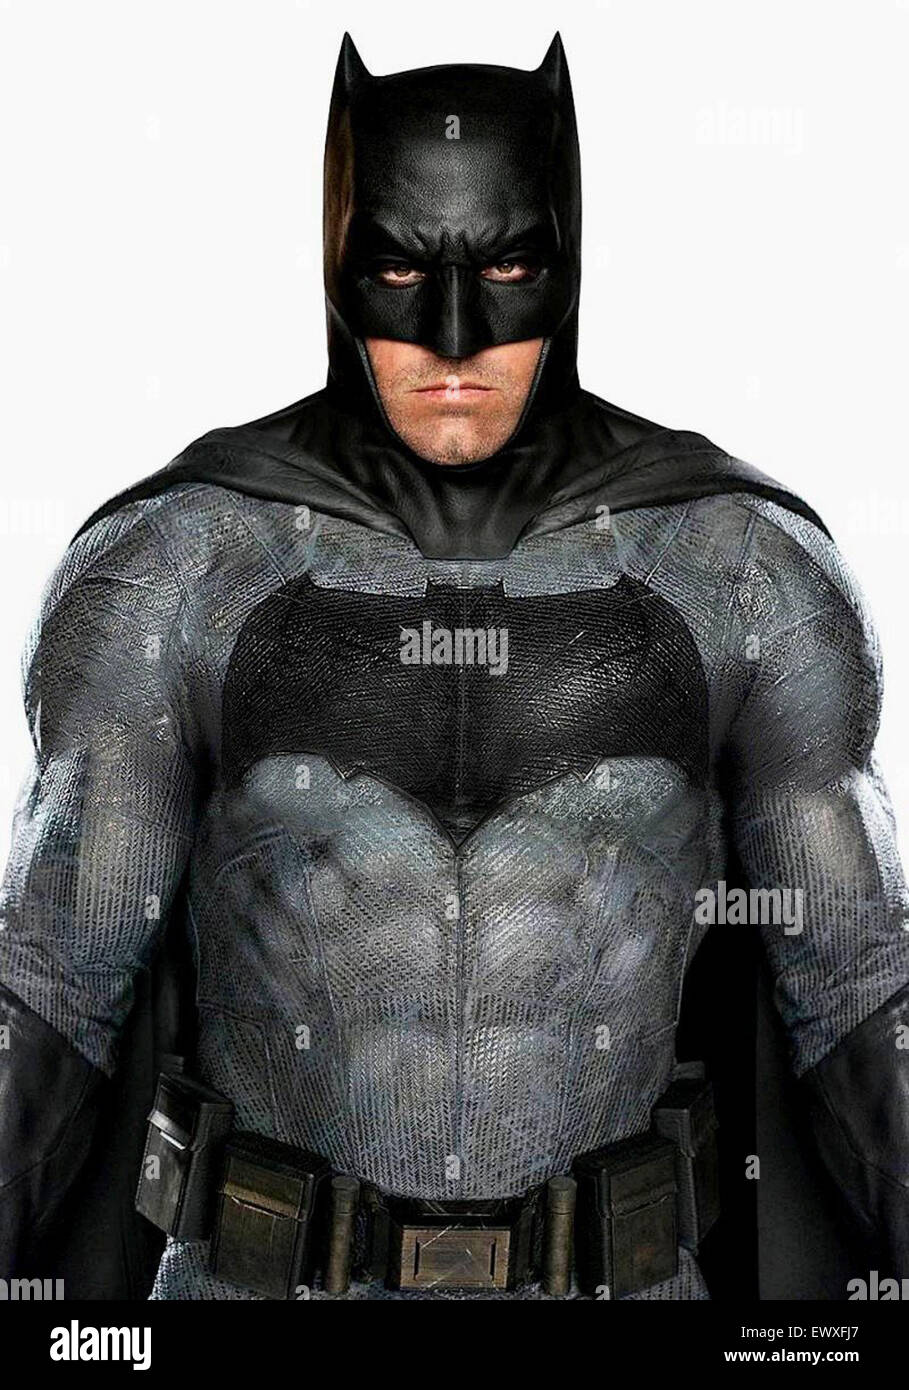 V-SUPERMAN BATMAN: DAWN OF JUSTICE (2016) BEN AFFLECK ZACK SNYDER (DIR  Stockfotografie - Alamy